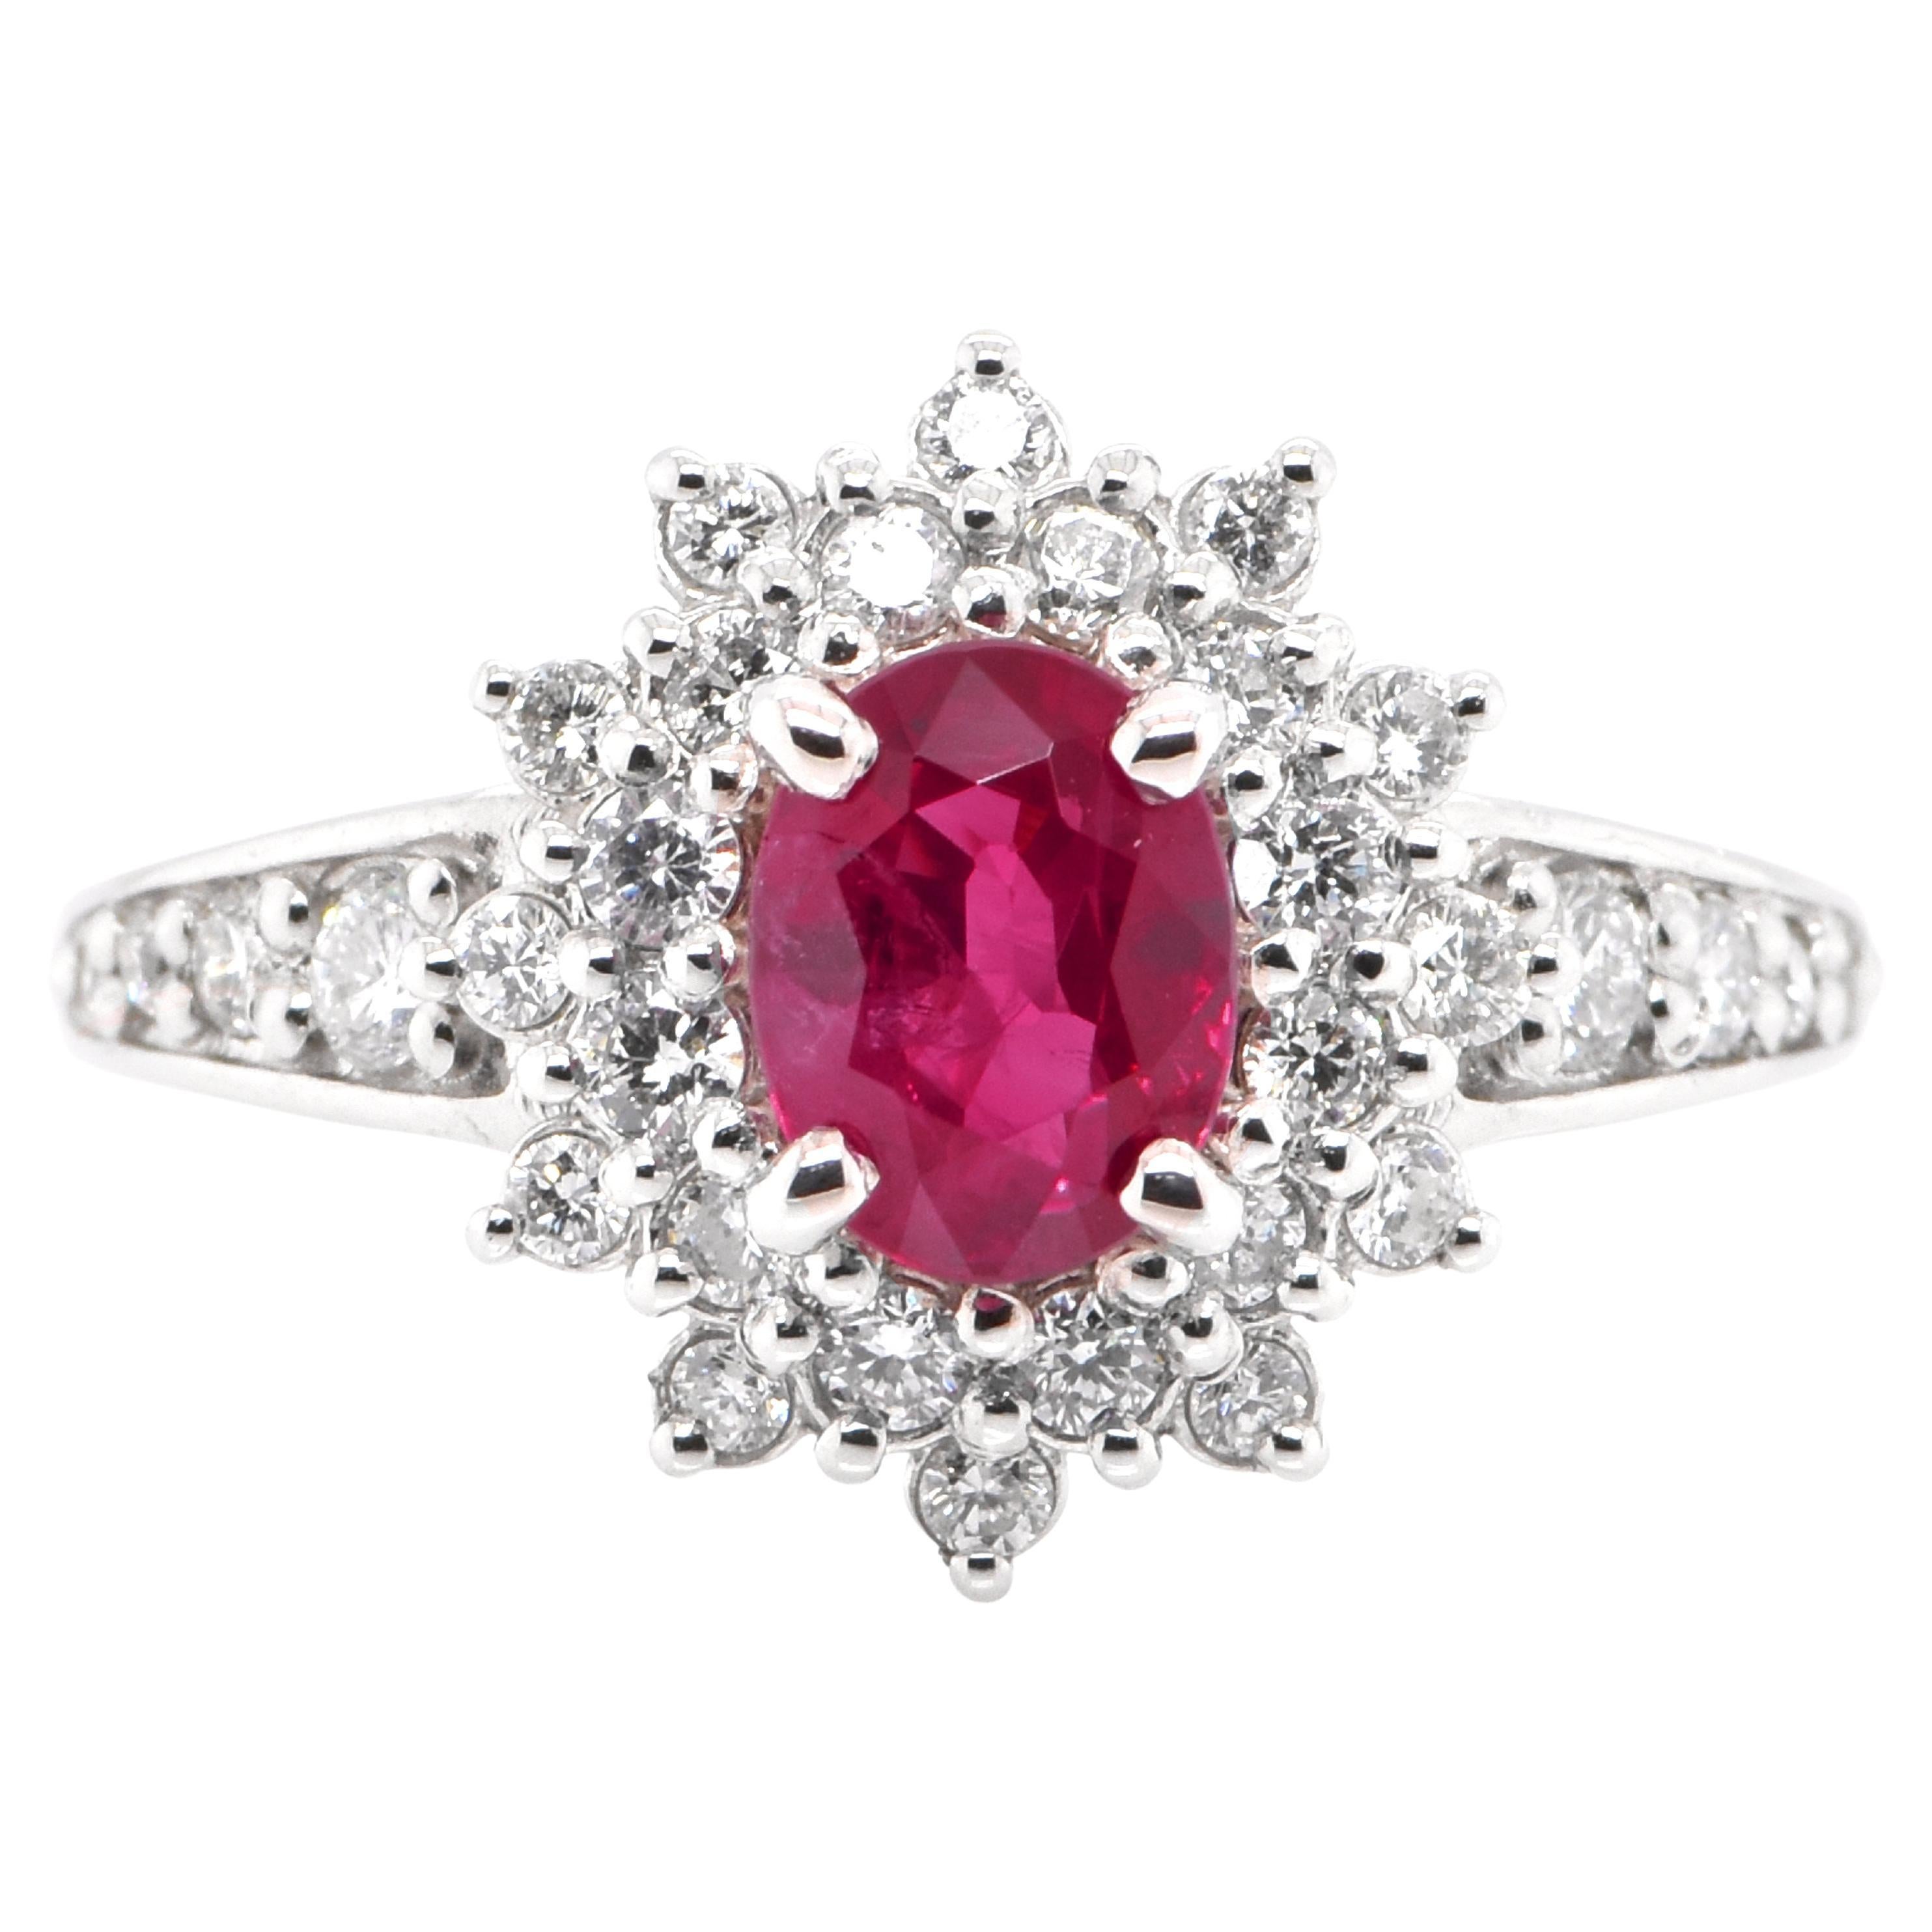 1.15 Carat Burma Ruby Diamond Ring in Platinum For Sale at 1stDibs